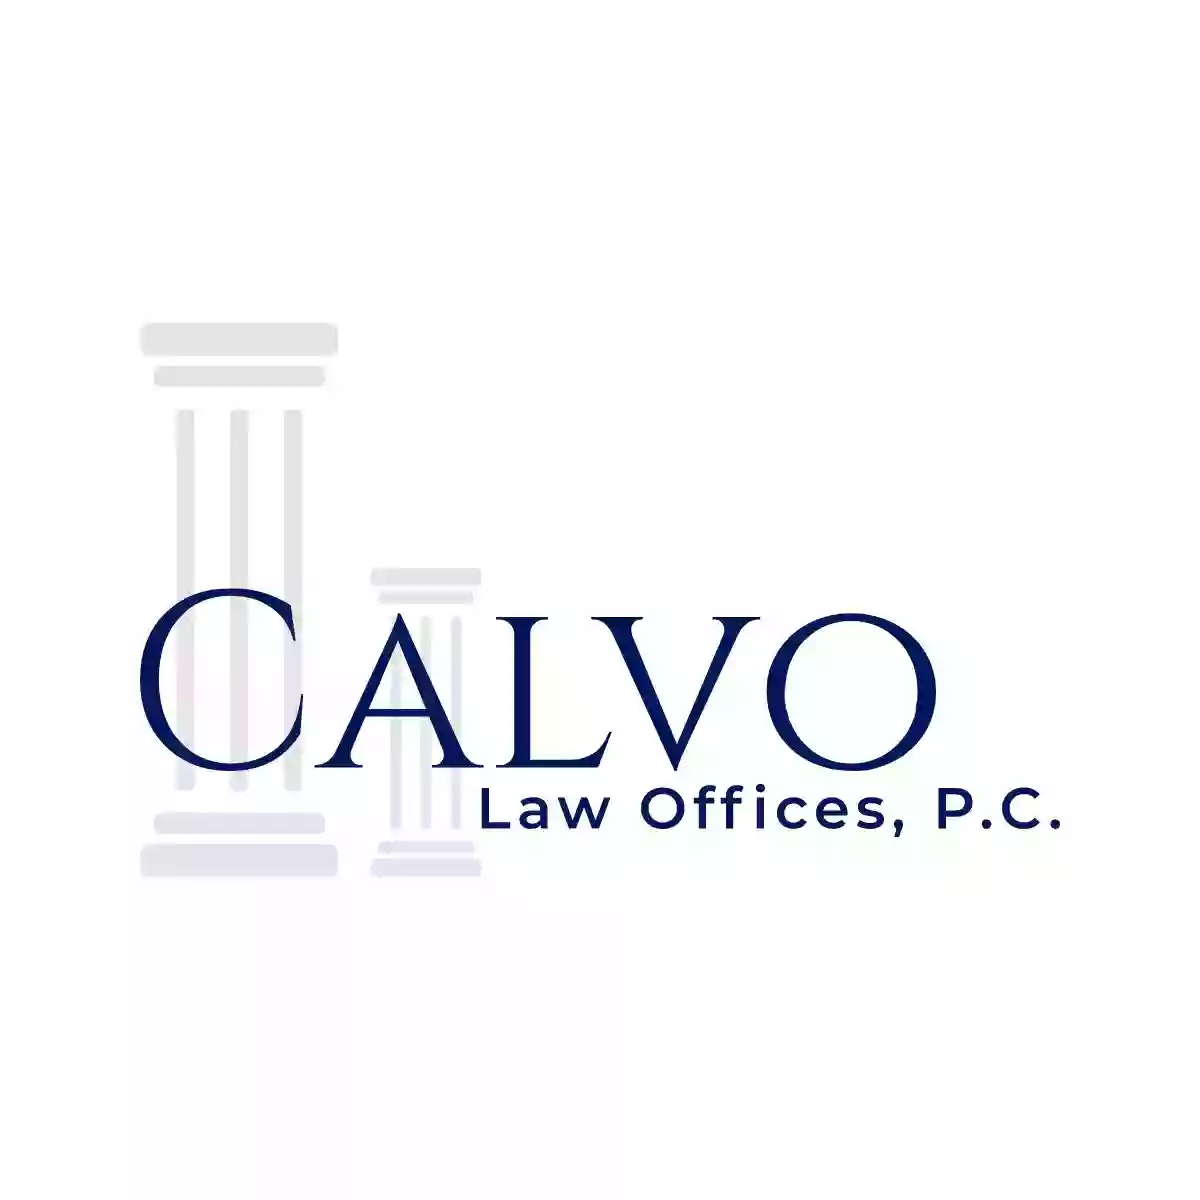 Calvo Law Offices, P.C.